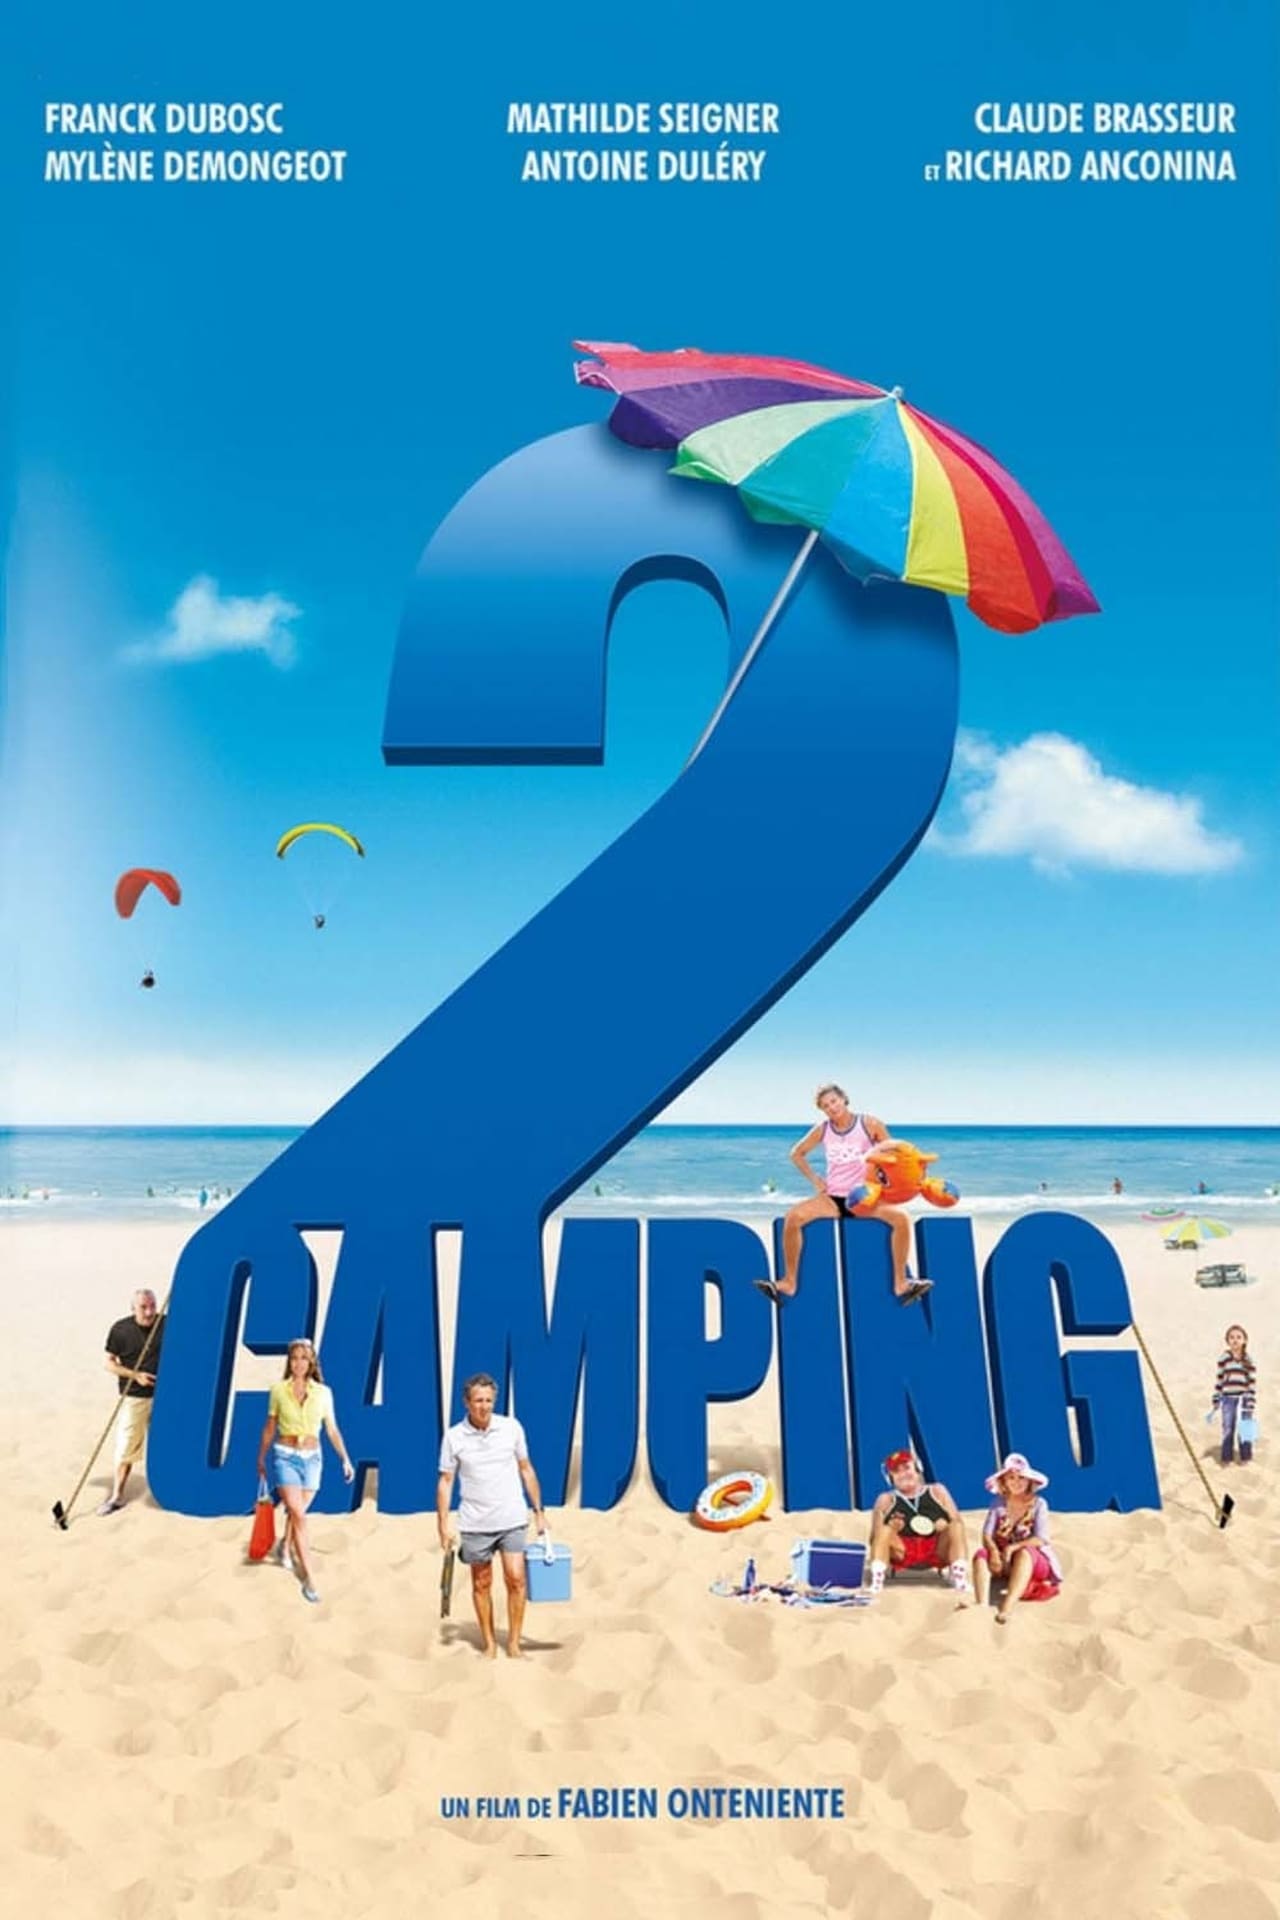 FR - Camping 2 (2010) - FRANCK DUBOSC